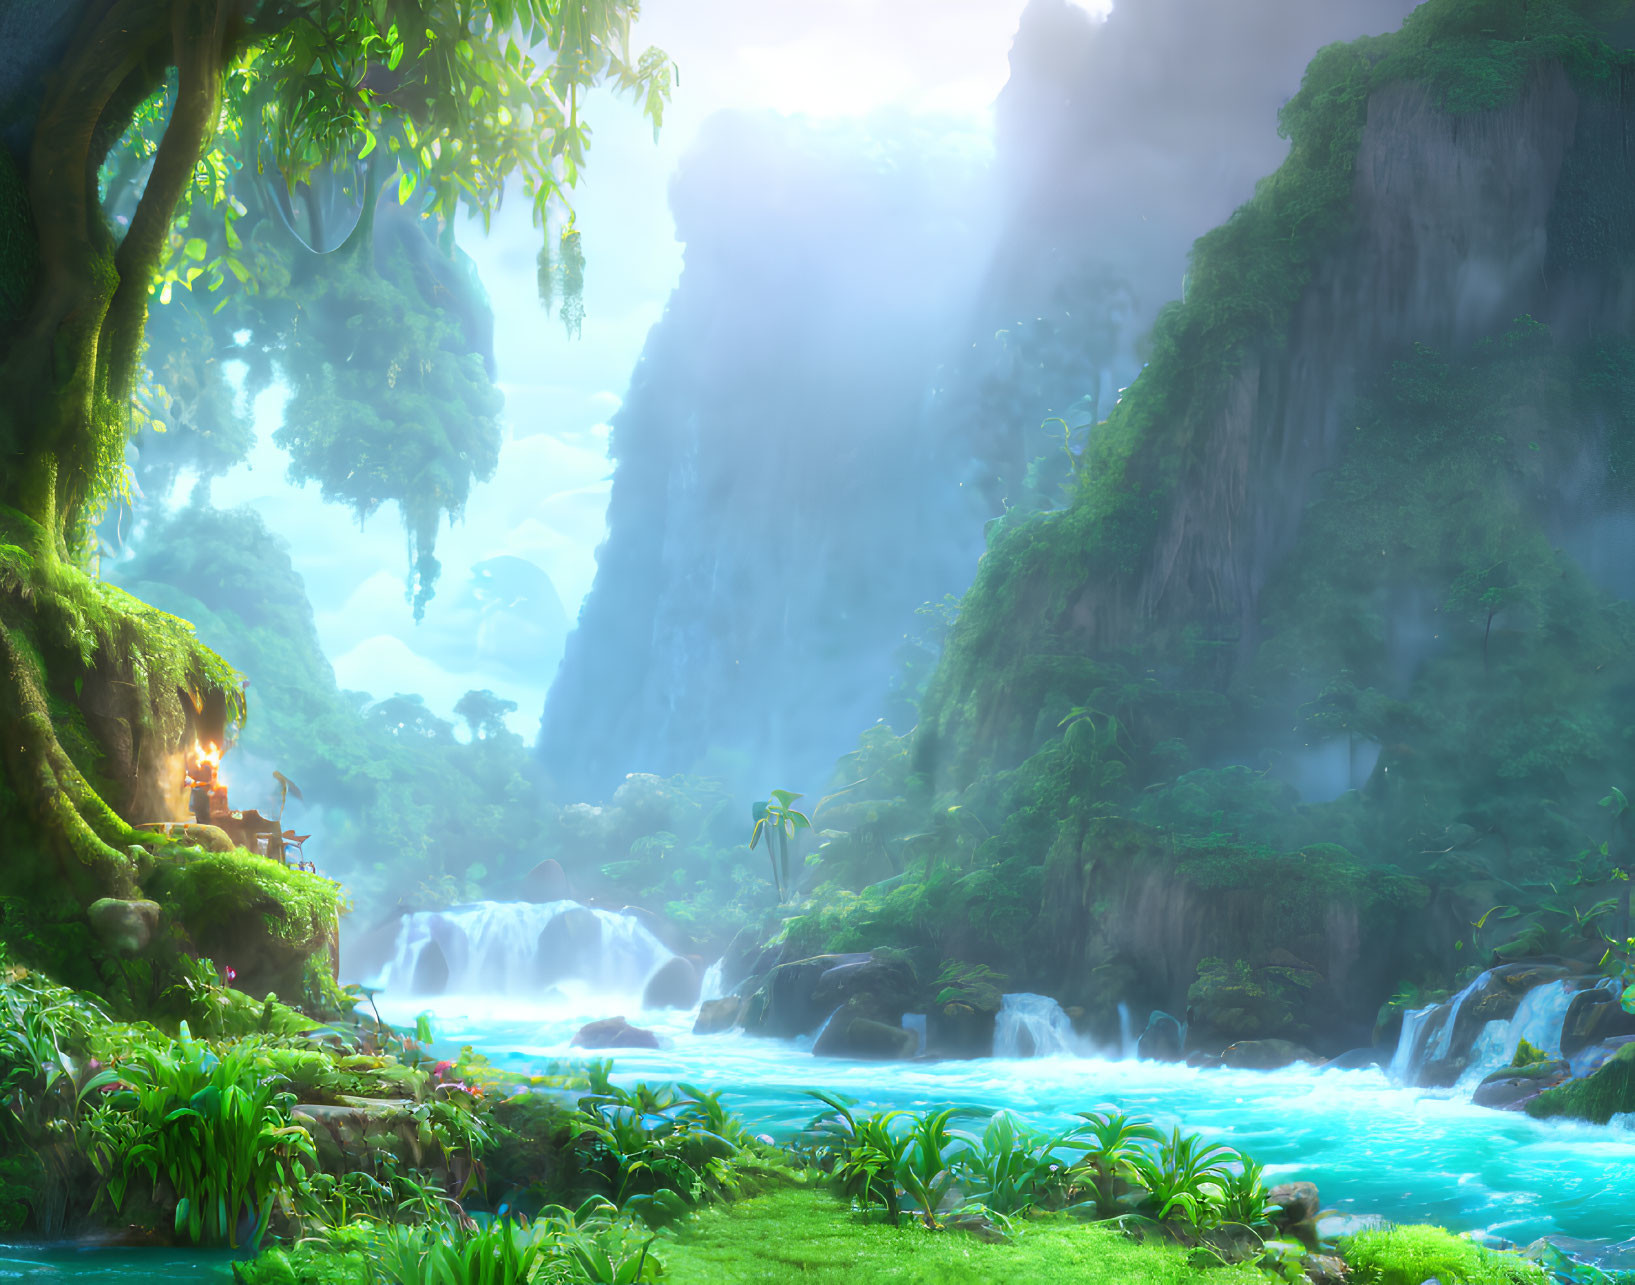 Fantasy landscape with waterfall, greenery, mist, hut, tree, sunlight